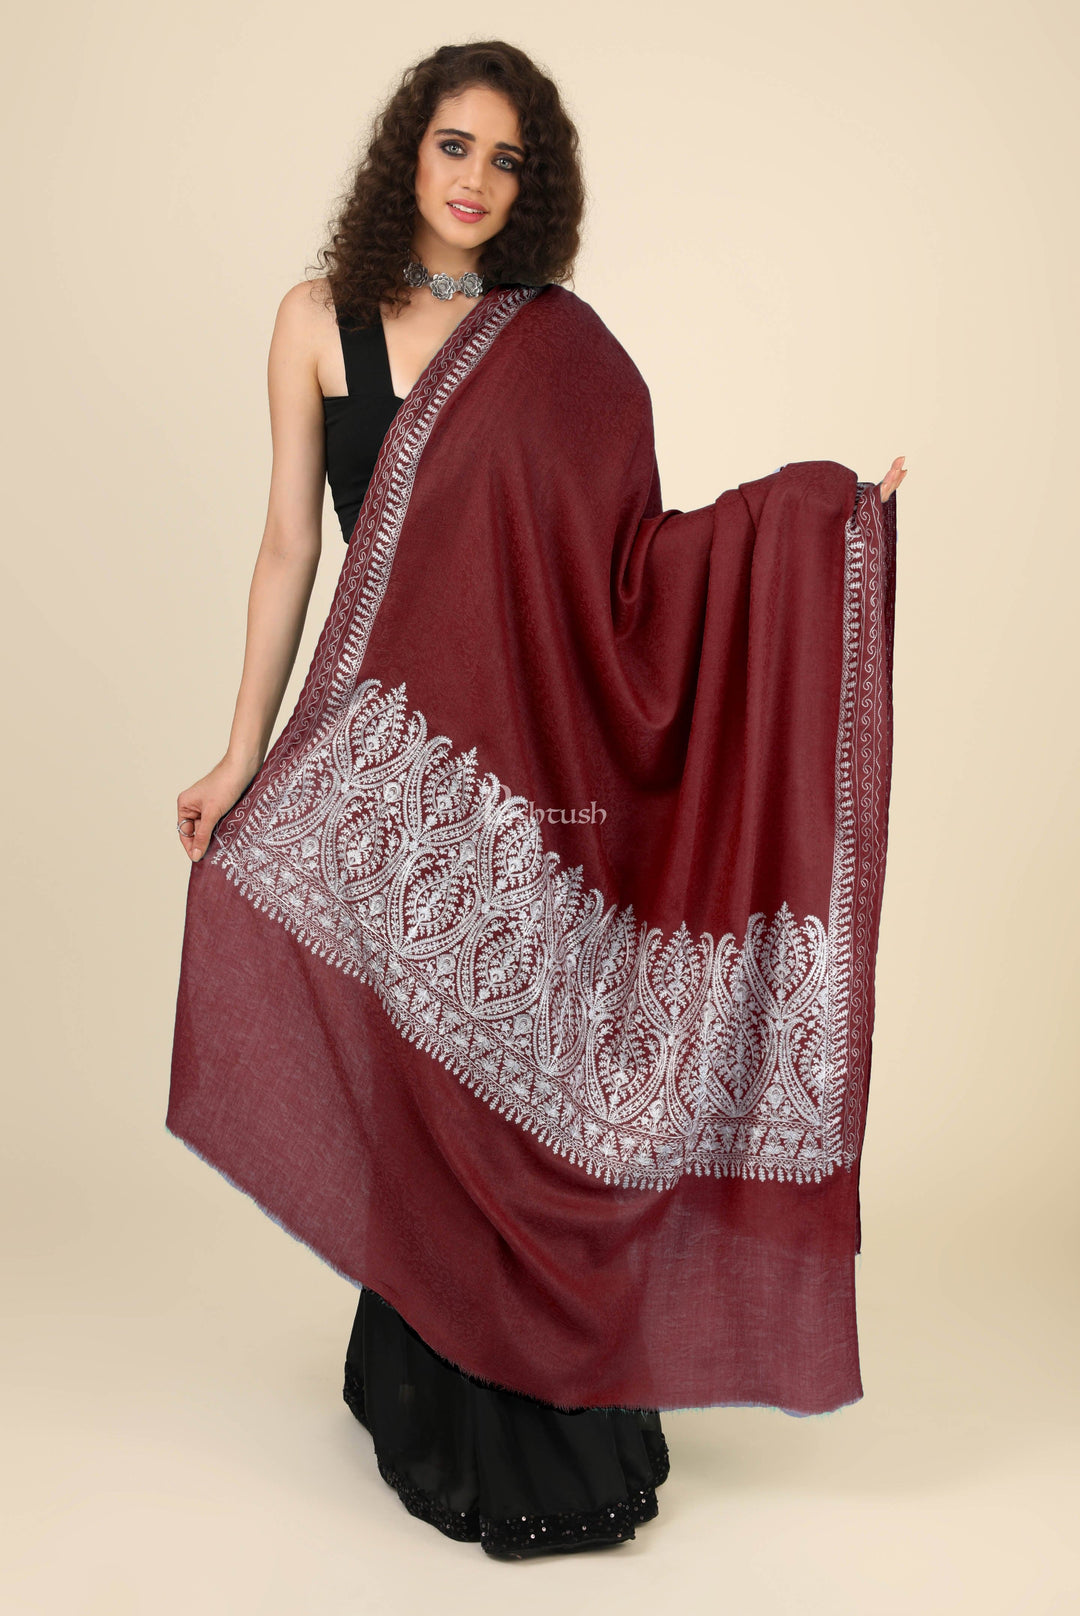 Pashtush India Womens Shawls Pashtush Womens Fine Wool Shawl, With Tone On Tone Nalki Embroidery, Soft And Warm, Maroon